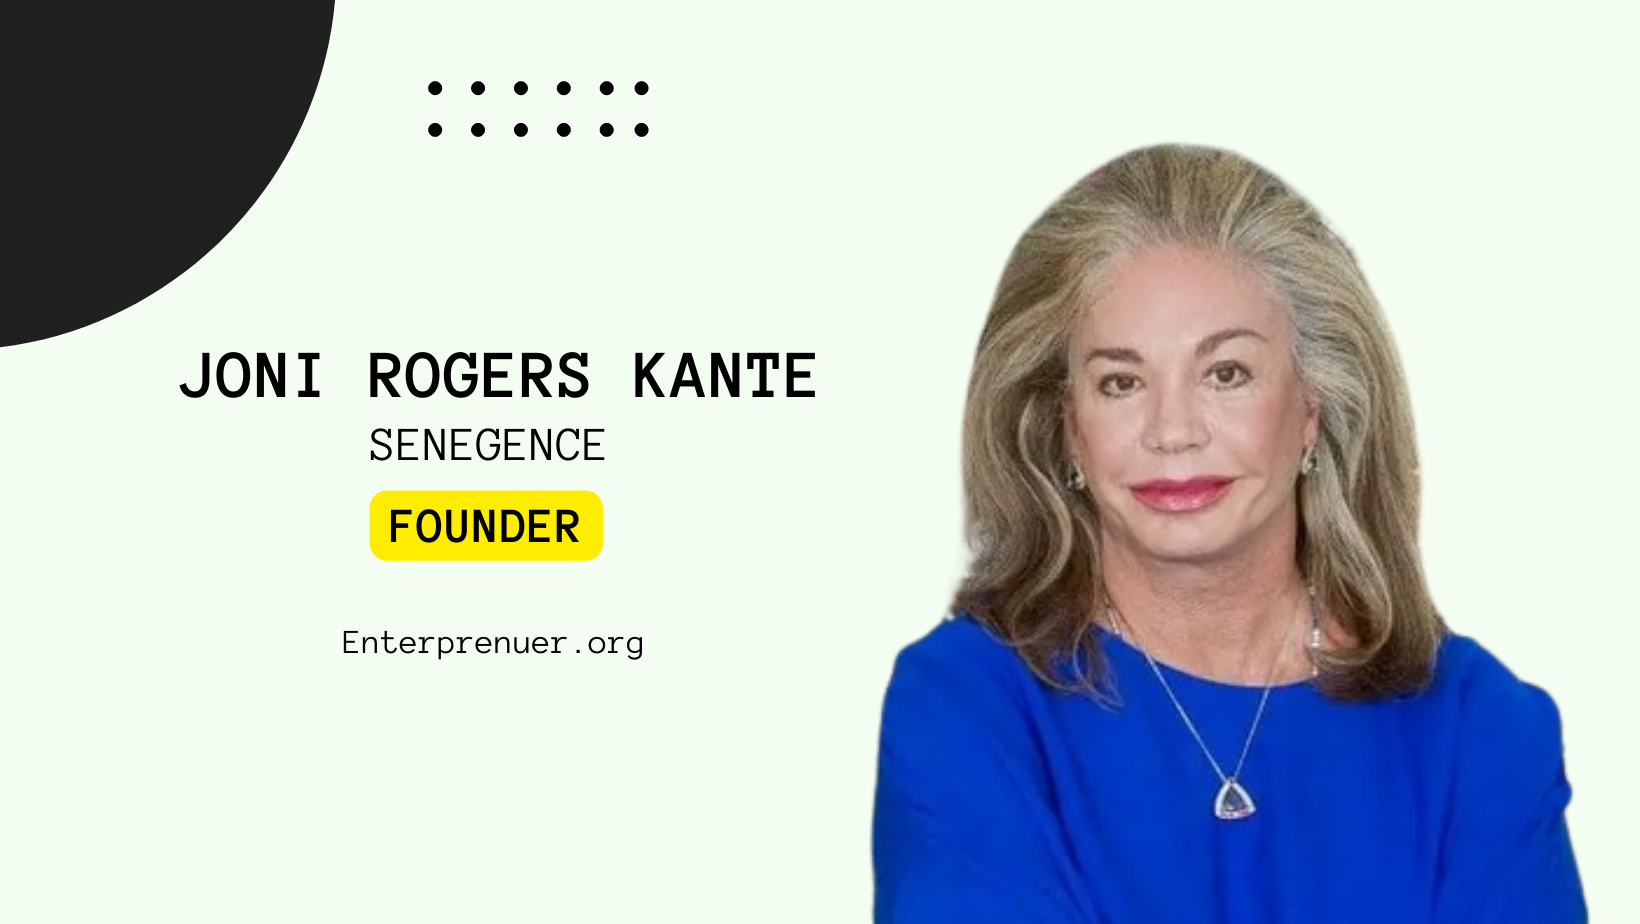 Meet Joni Rogers-Kante Founder of SeneGence